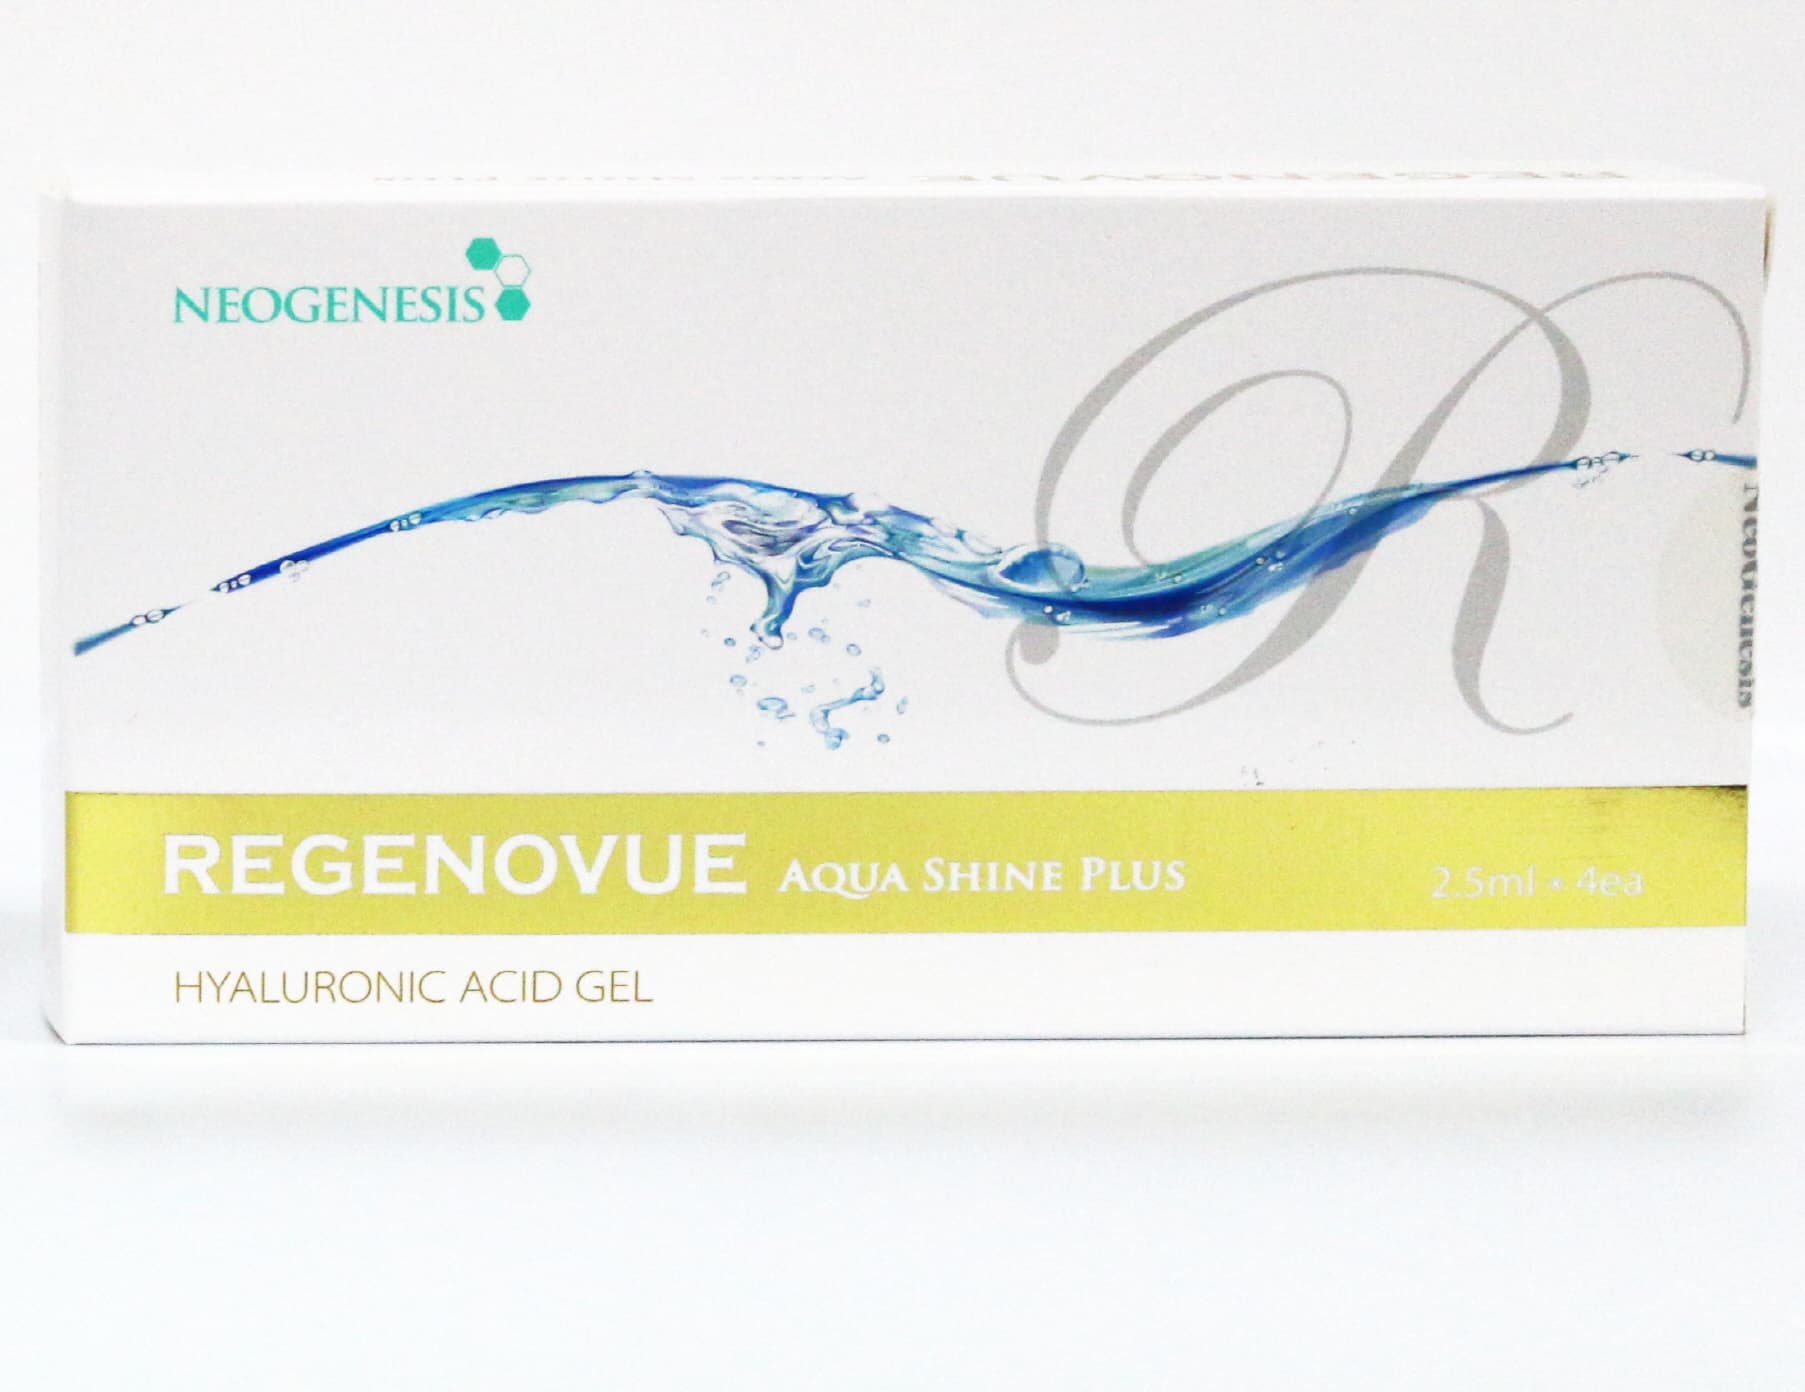 _NeoGenesis_ Regenovue Aqua Shine _ _Made in Korea_